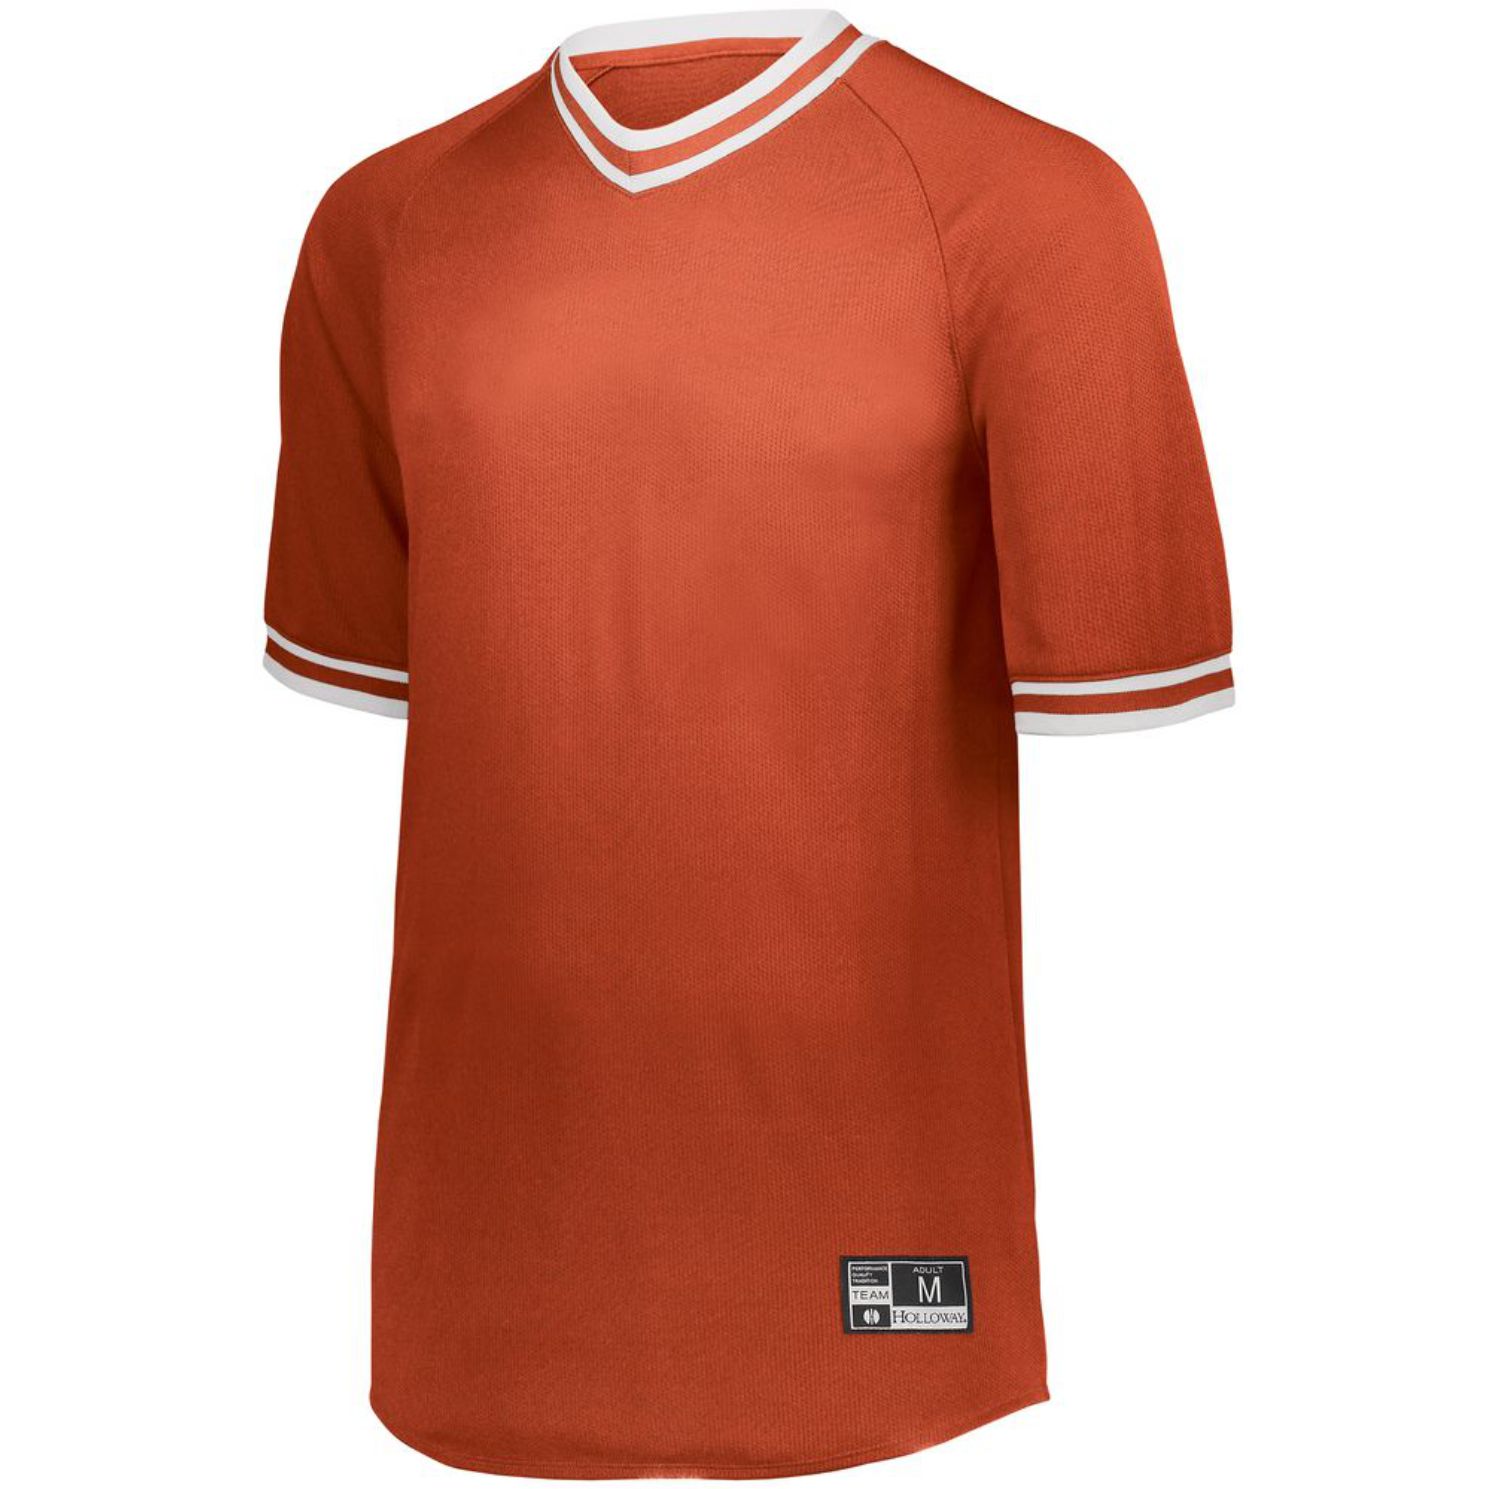 Holloway Retro V-Neck Baseball Jersey #221021 Orange / White